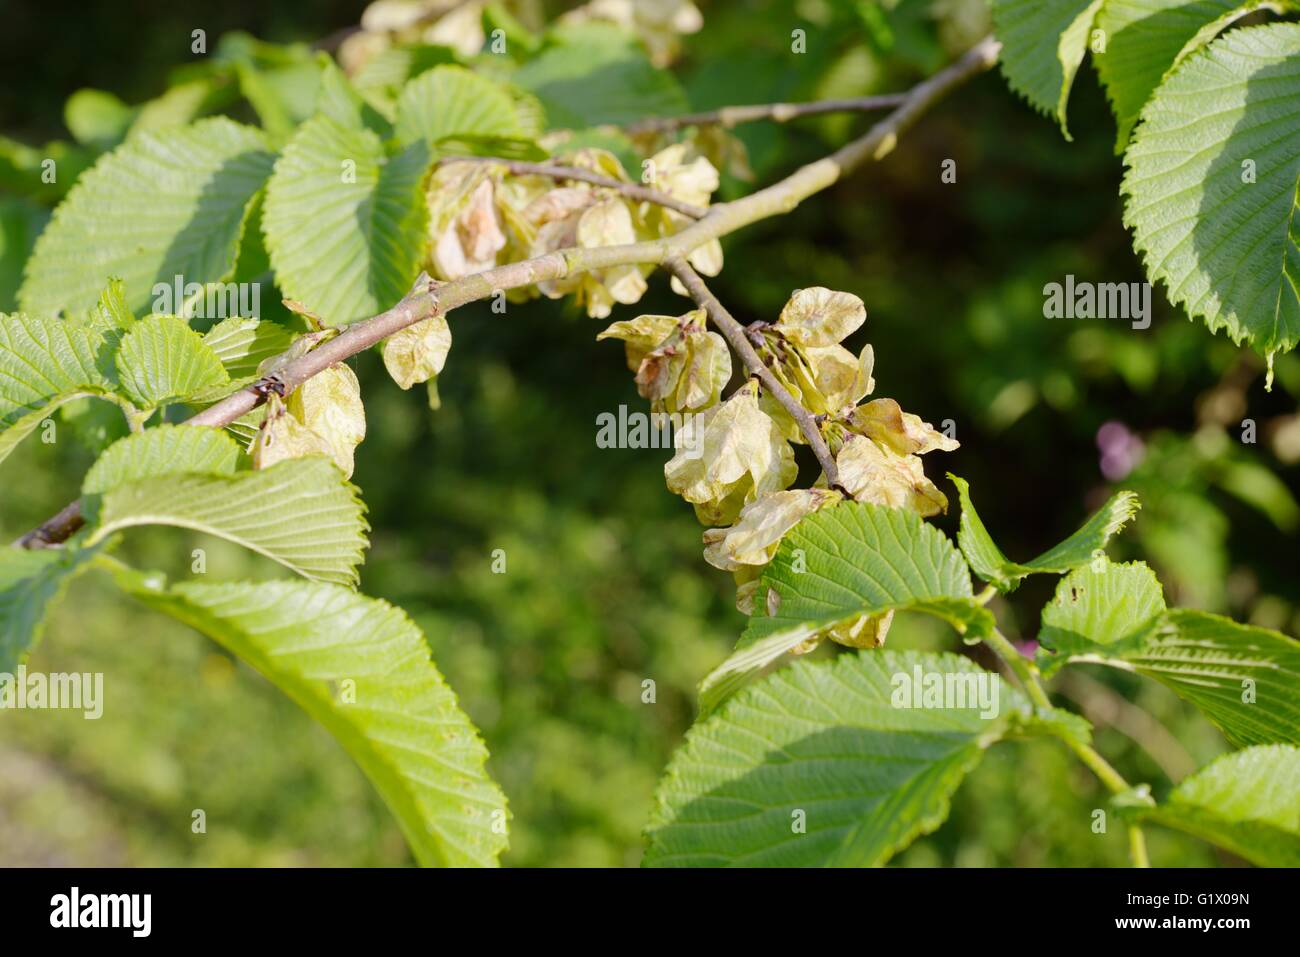 Samara or winged seeds of Ulmus glabra, Wych Elm  in Spring, Wales, UK. Stock Photo